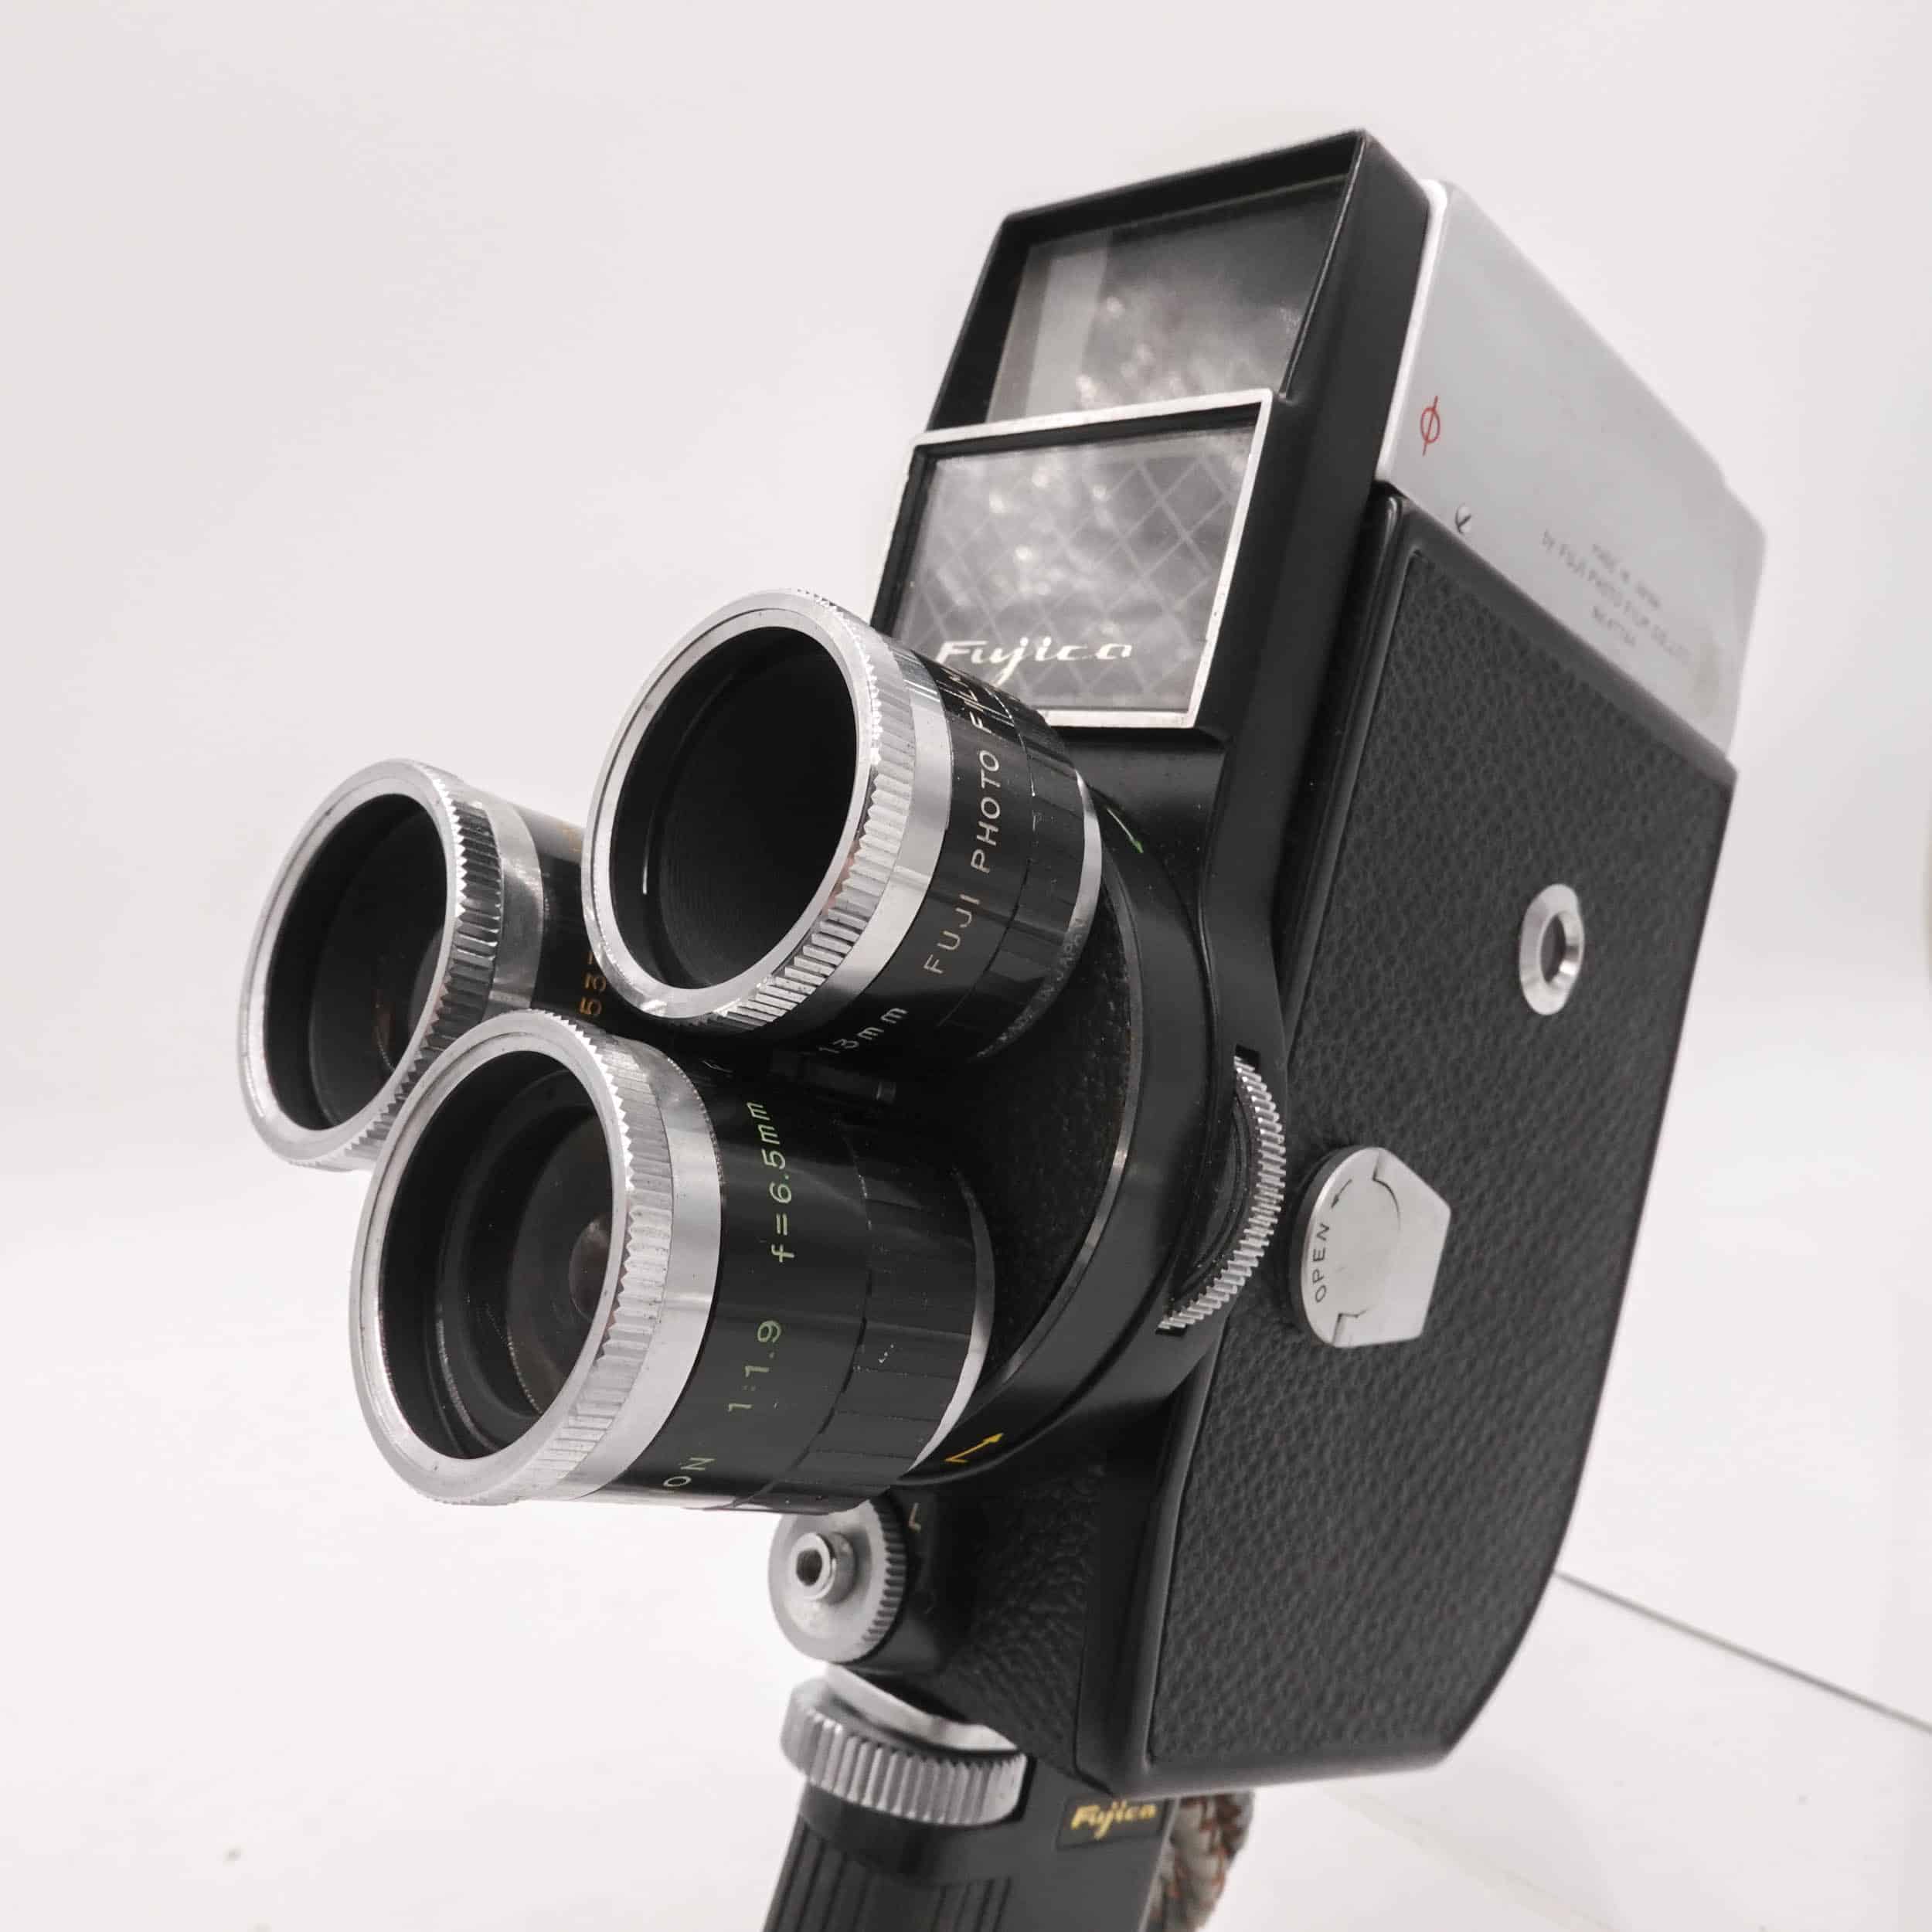 Fujica 8 T3 Double 8mm Cine Film Camera